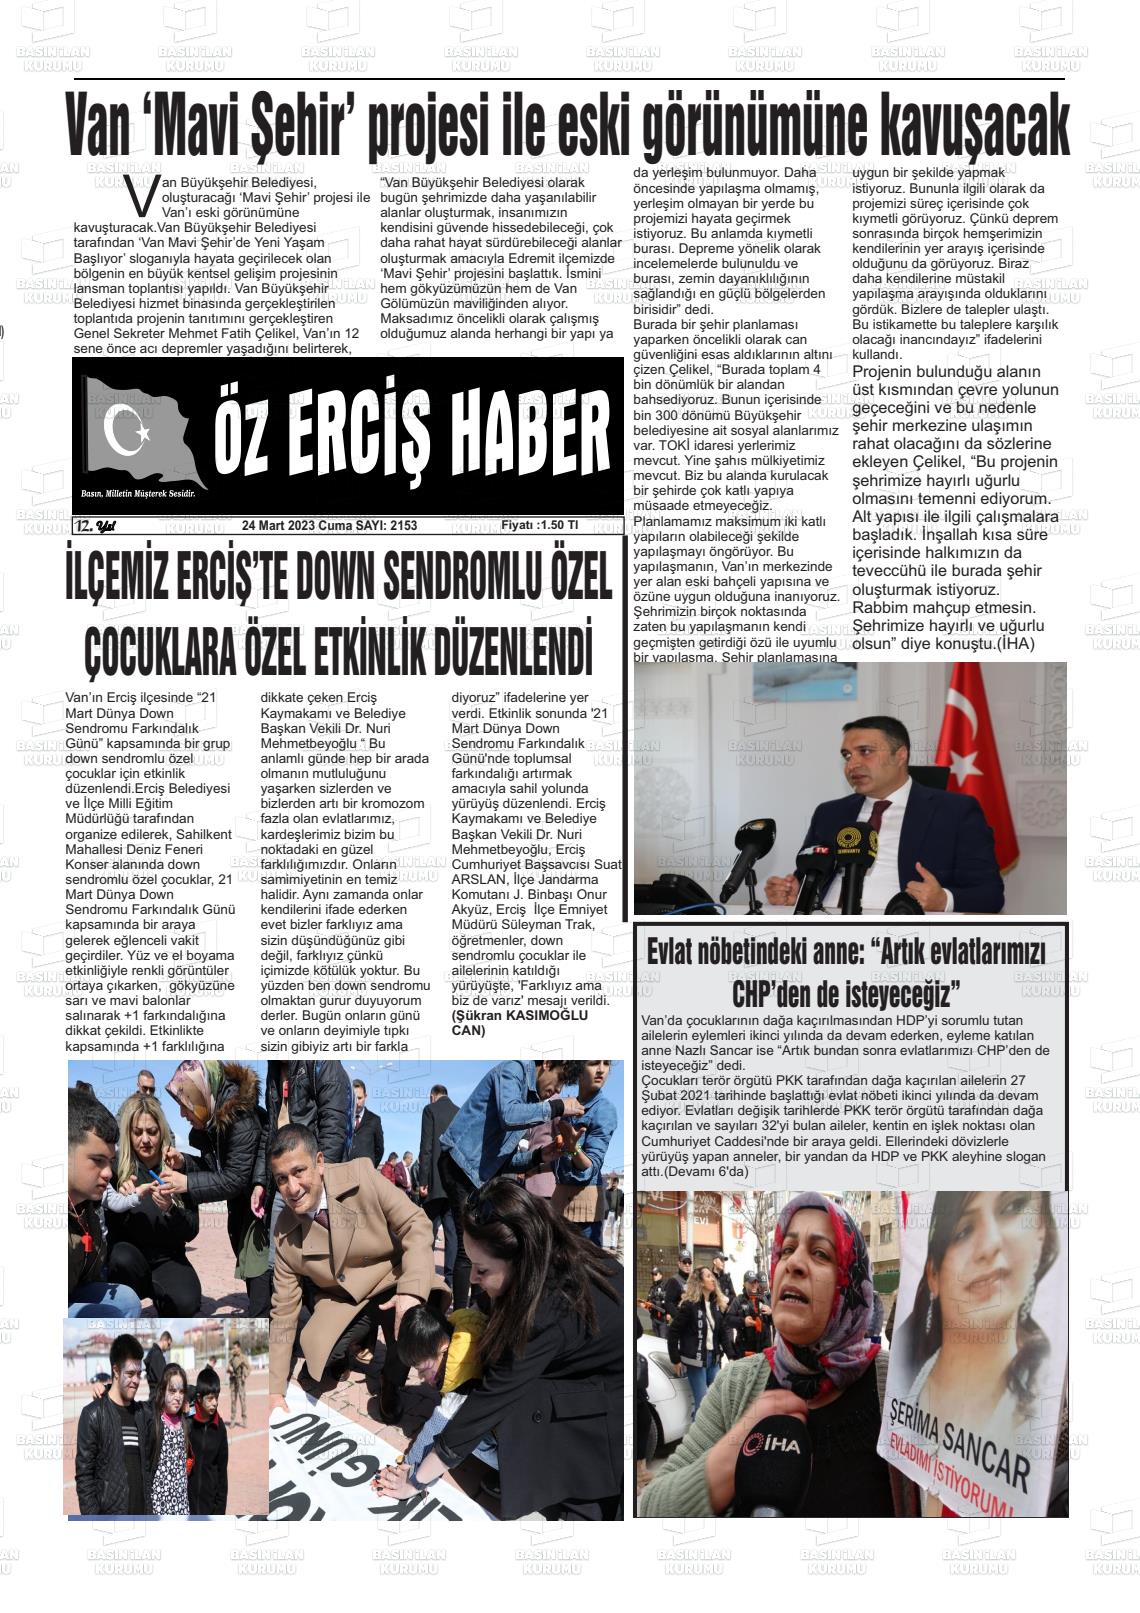 24 Mart 2023 Öz Erciş Haber Gazete Manşeti